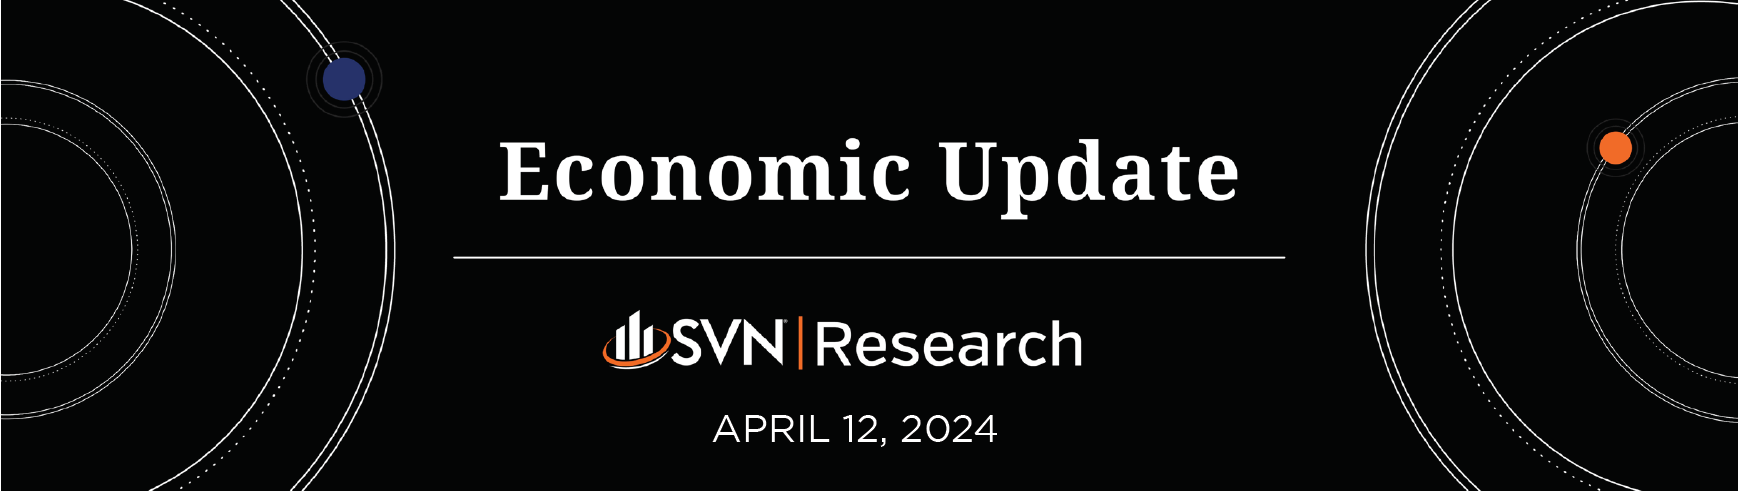 SVN | Research Economic Update 4.12.2024